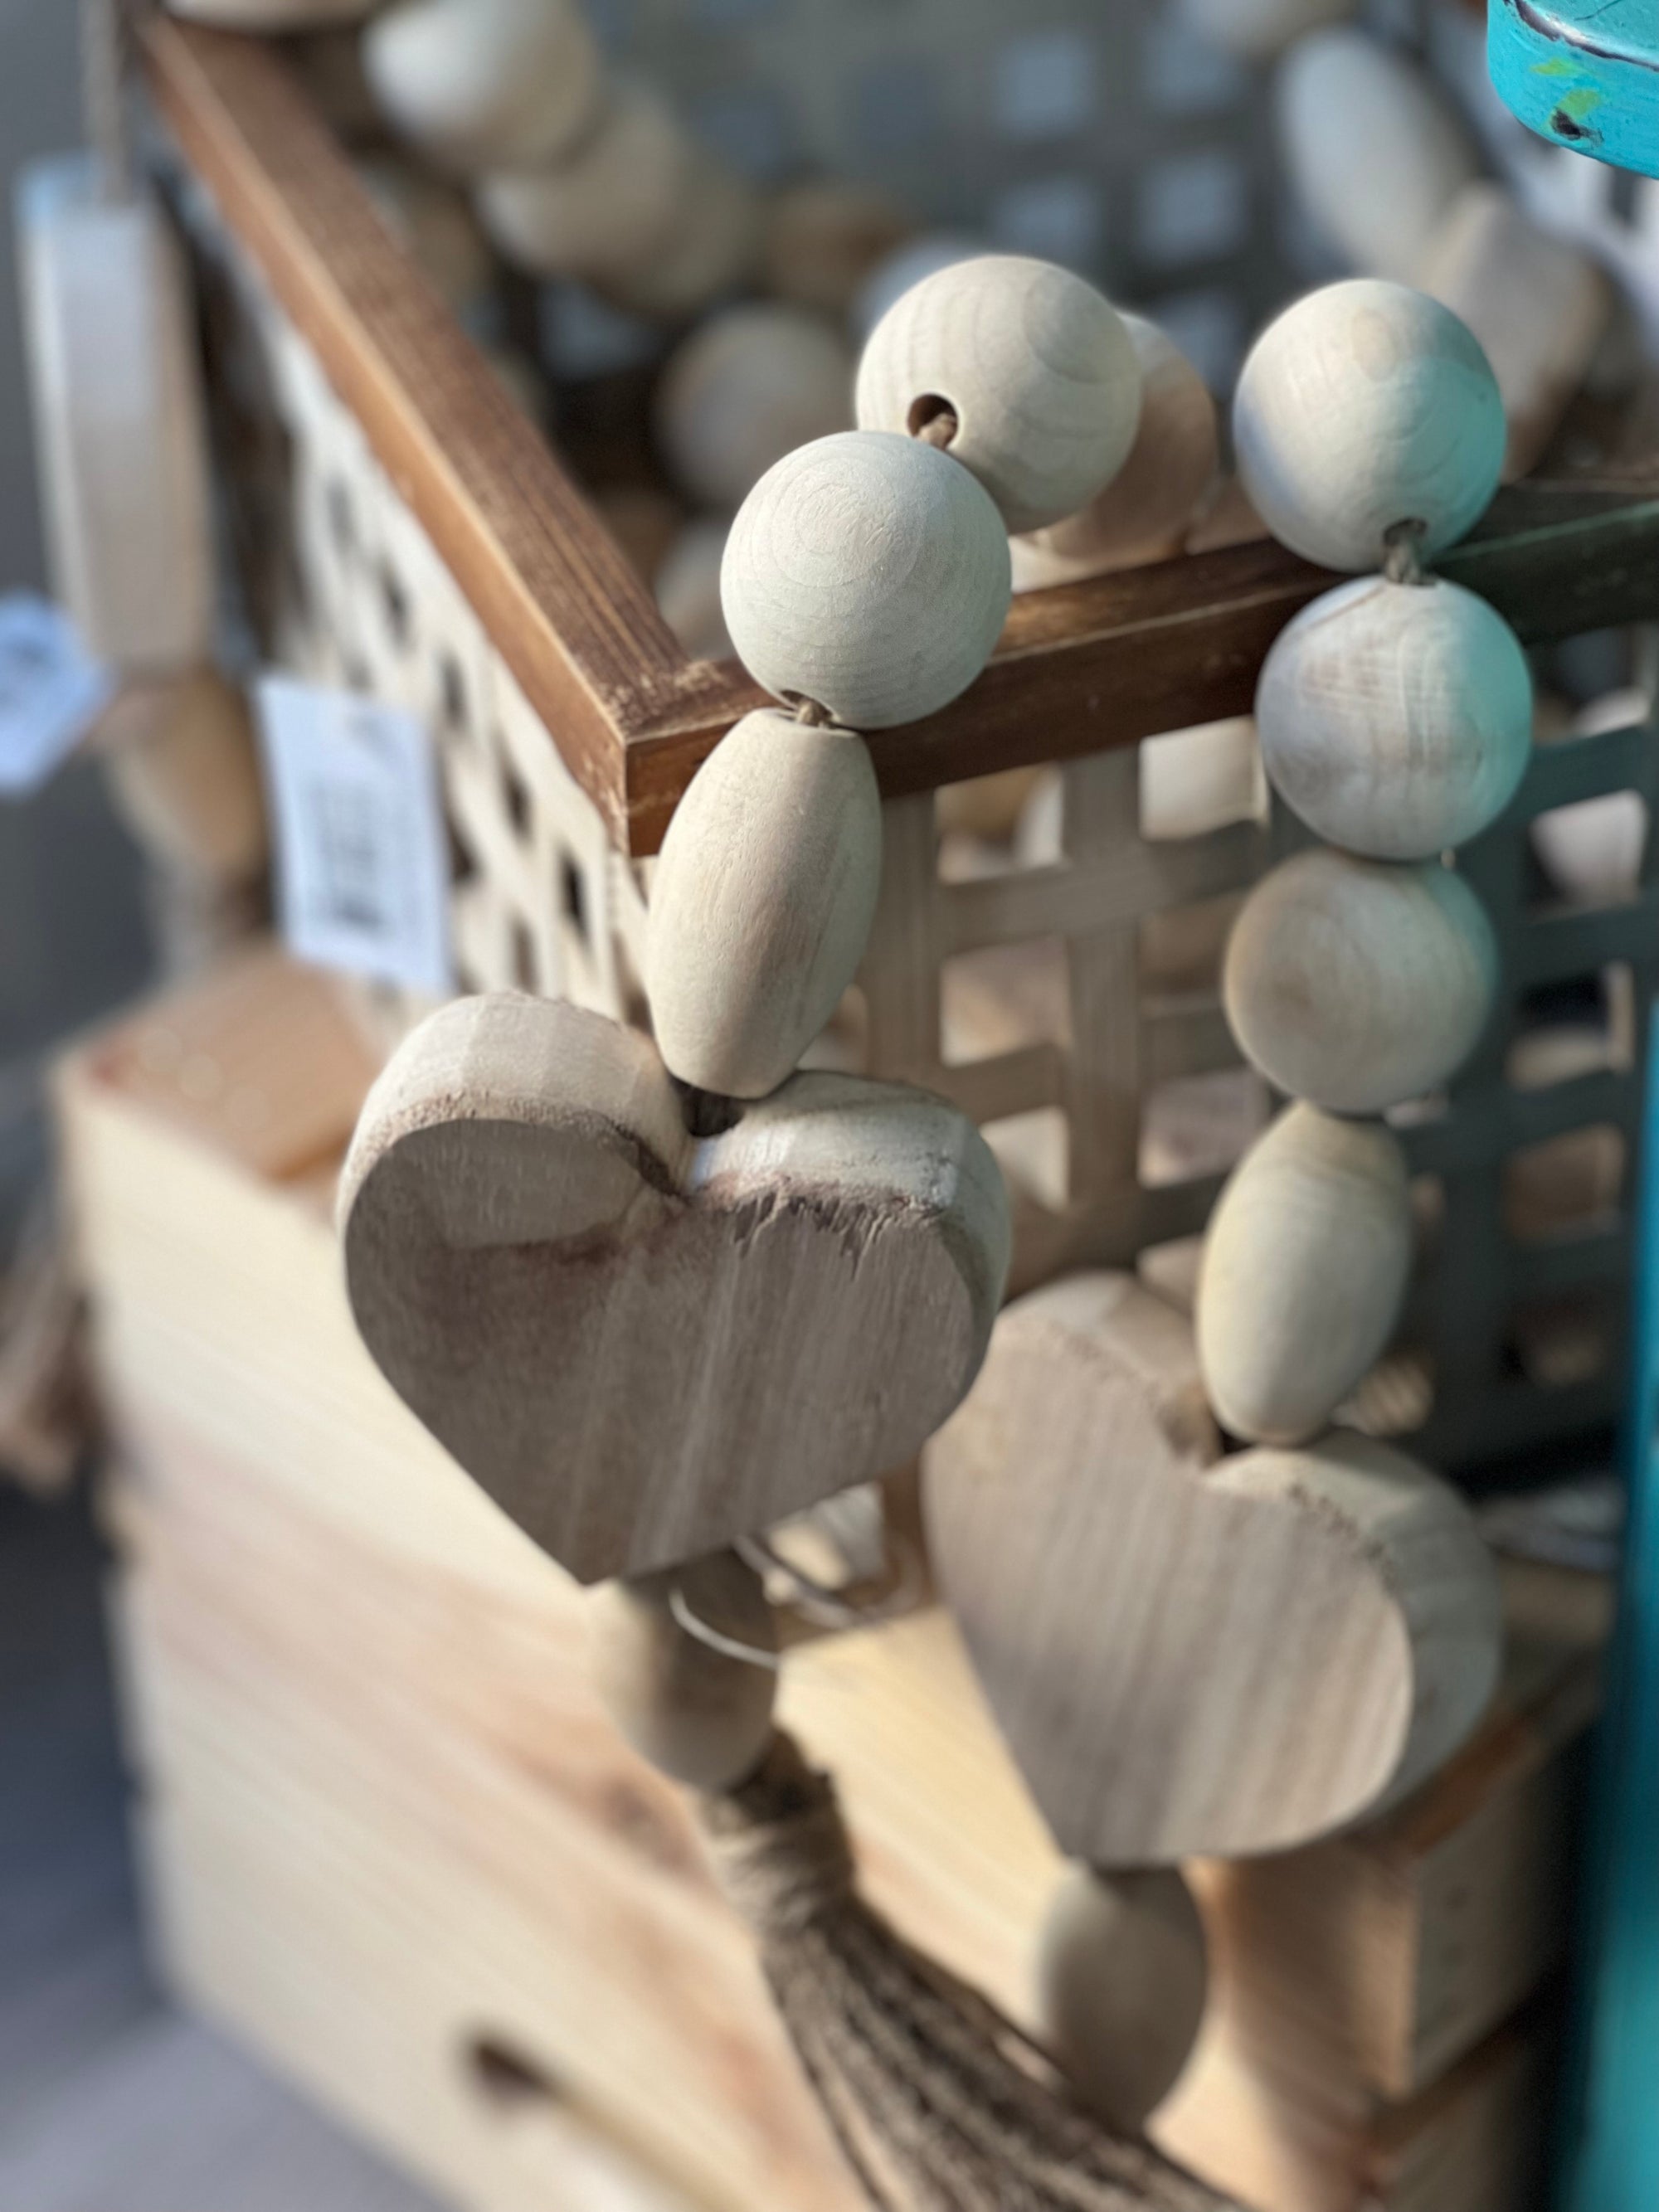 Heart Wood Beads